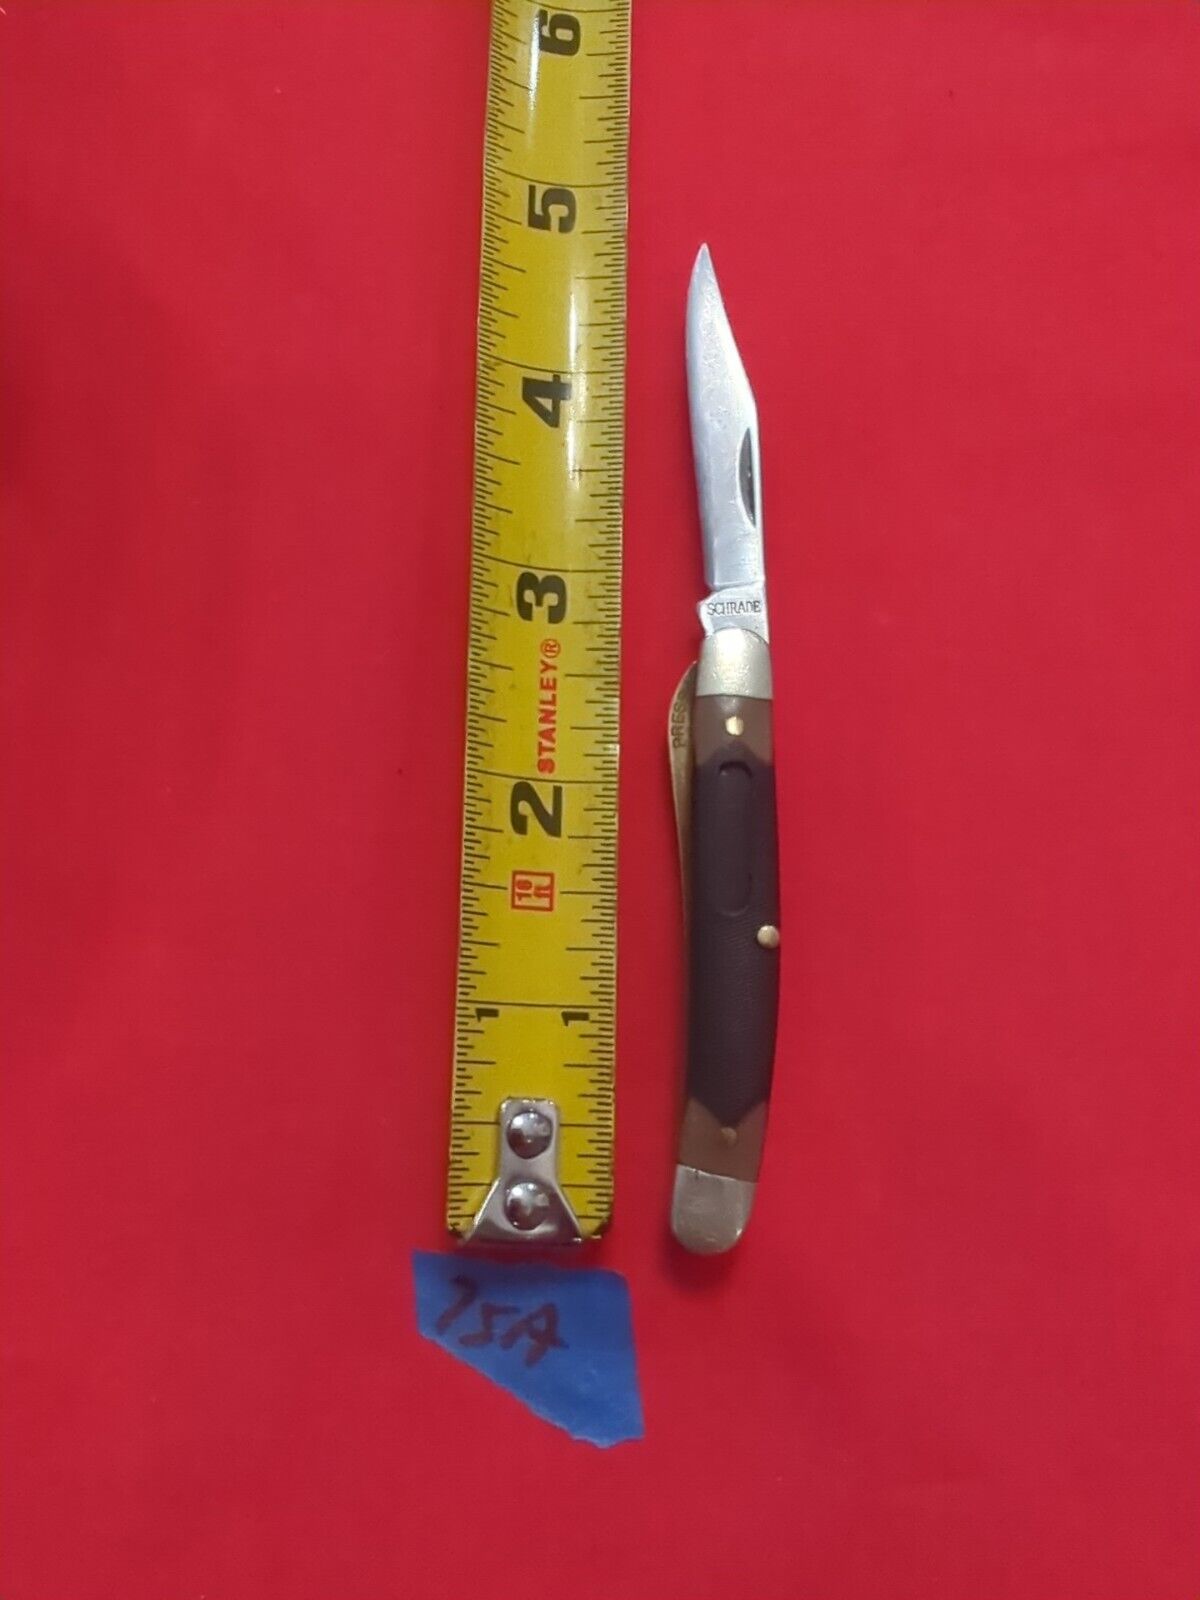 Schrade 18OT Pocket Knife